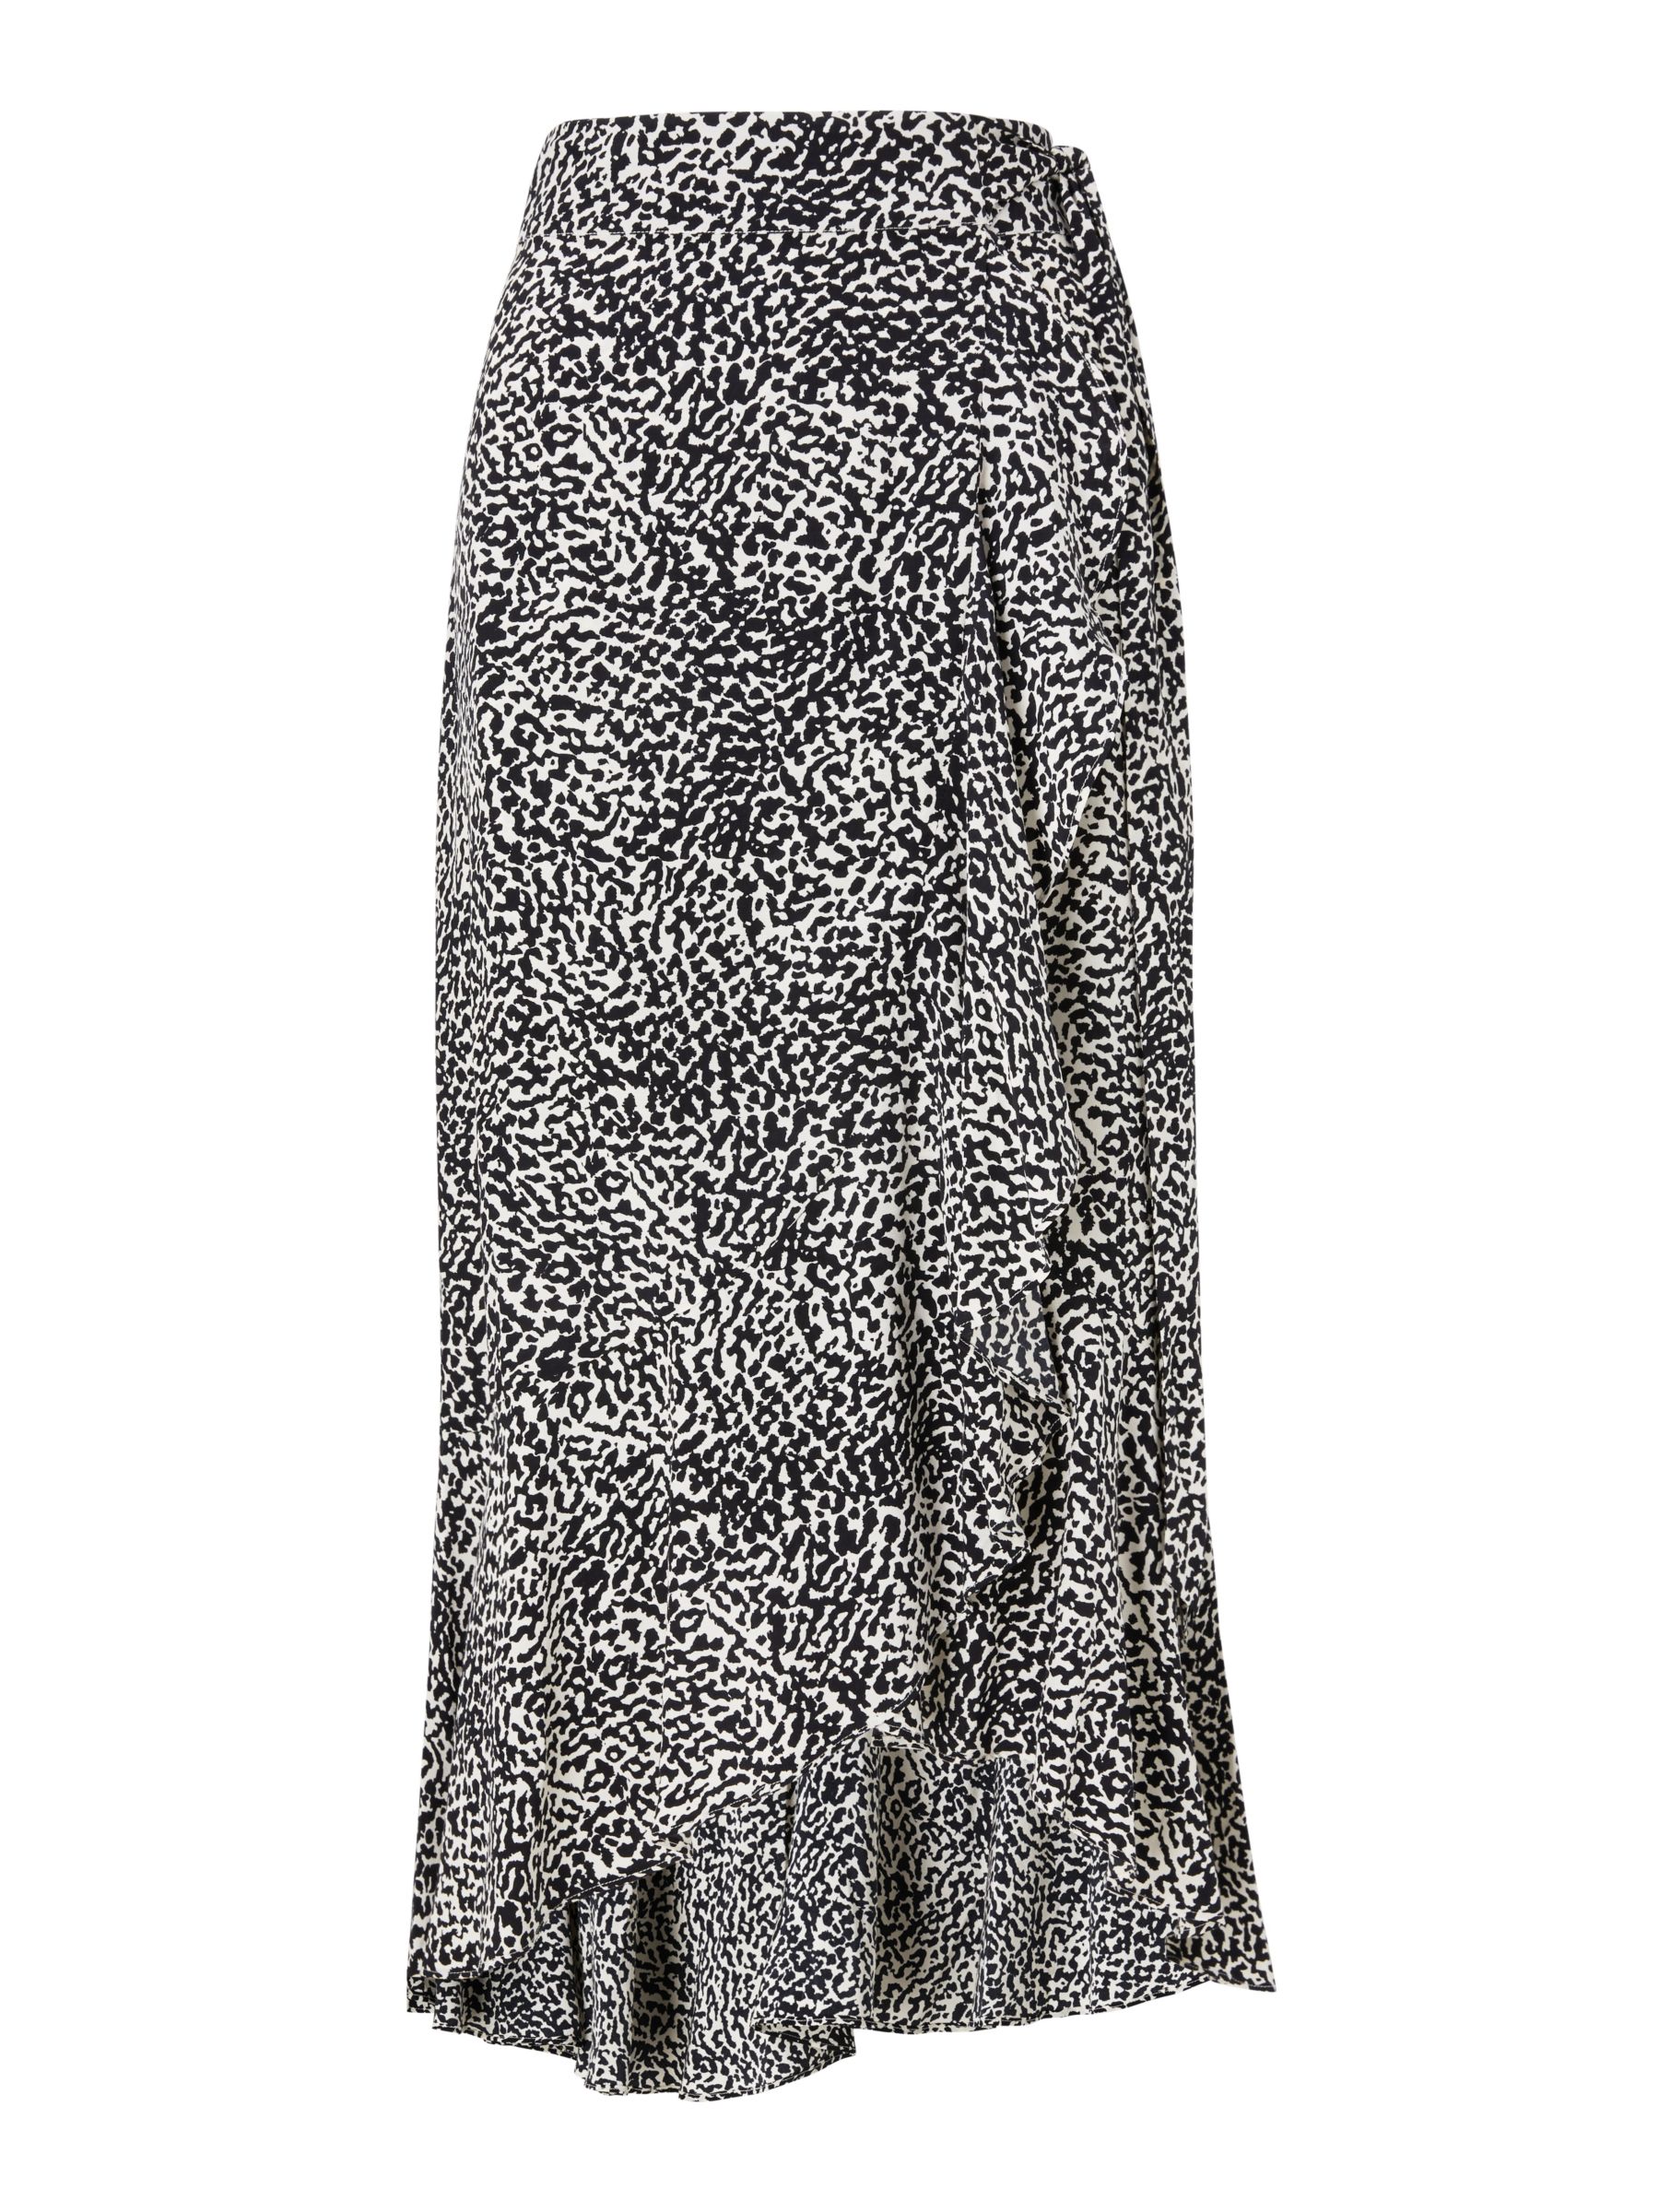 Somerset by Alice Temperley Mini Leopard Print Skirt, Nude